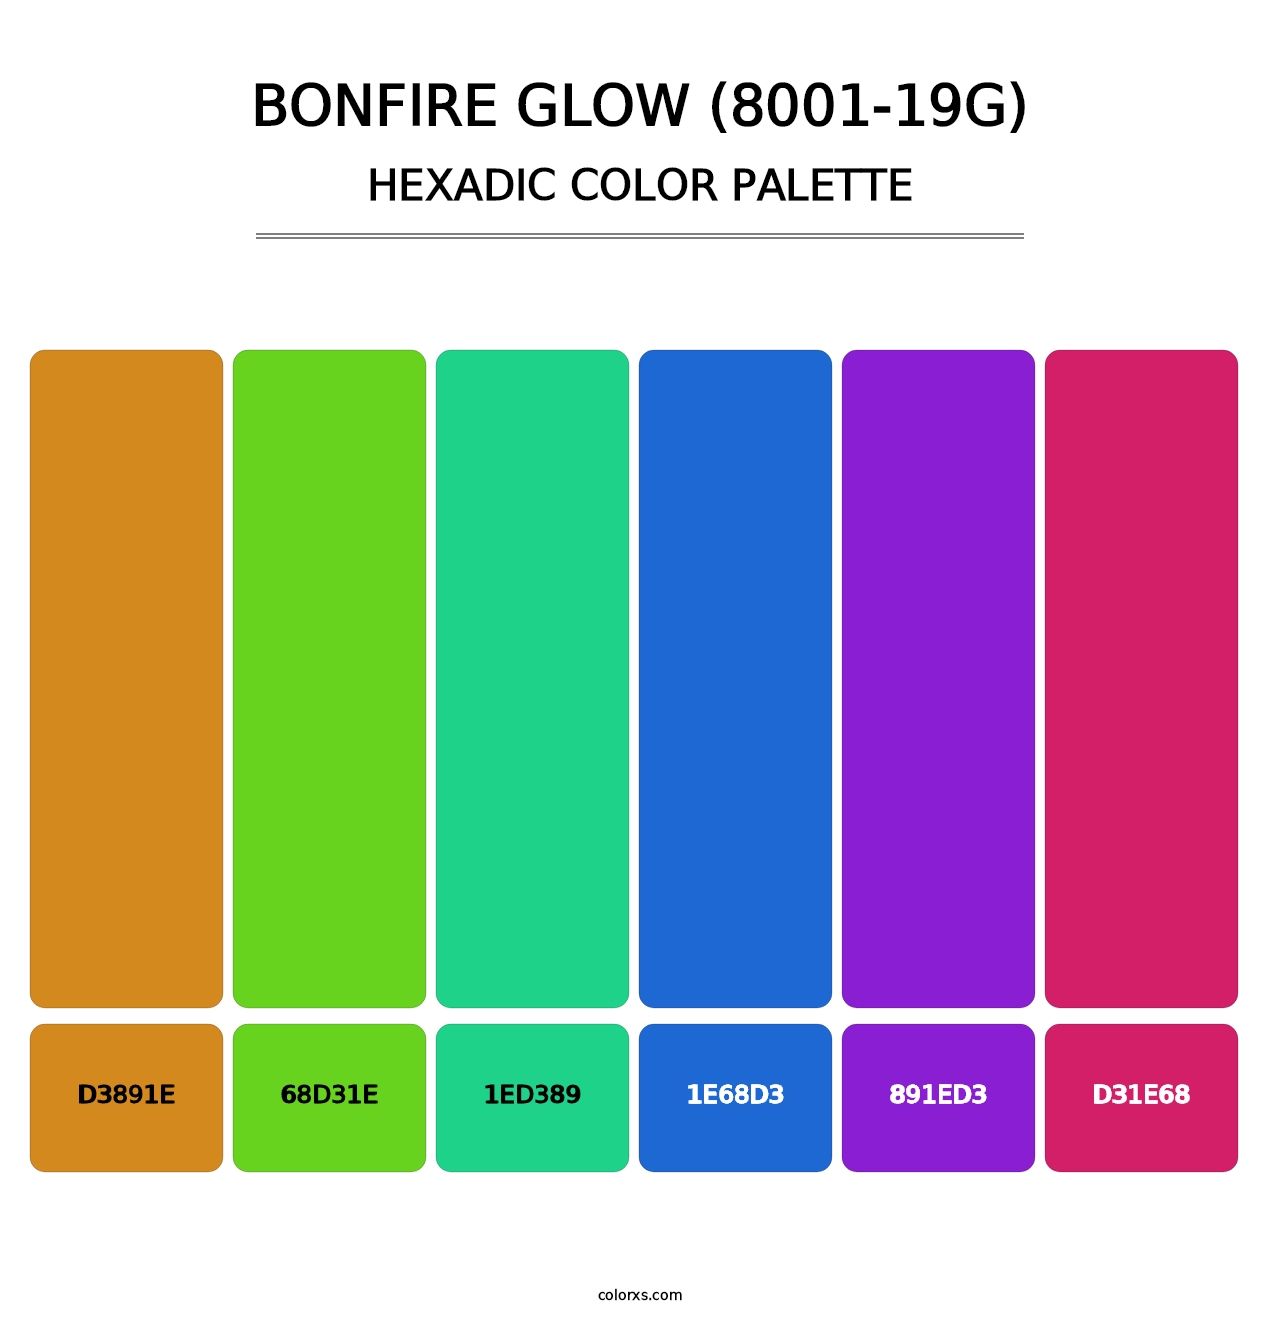 Bonfire Glow (8001-19G) - Hexadic Color Palette